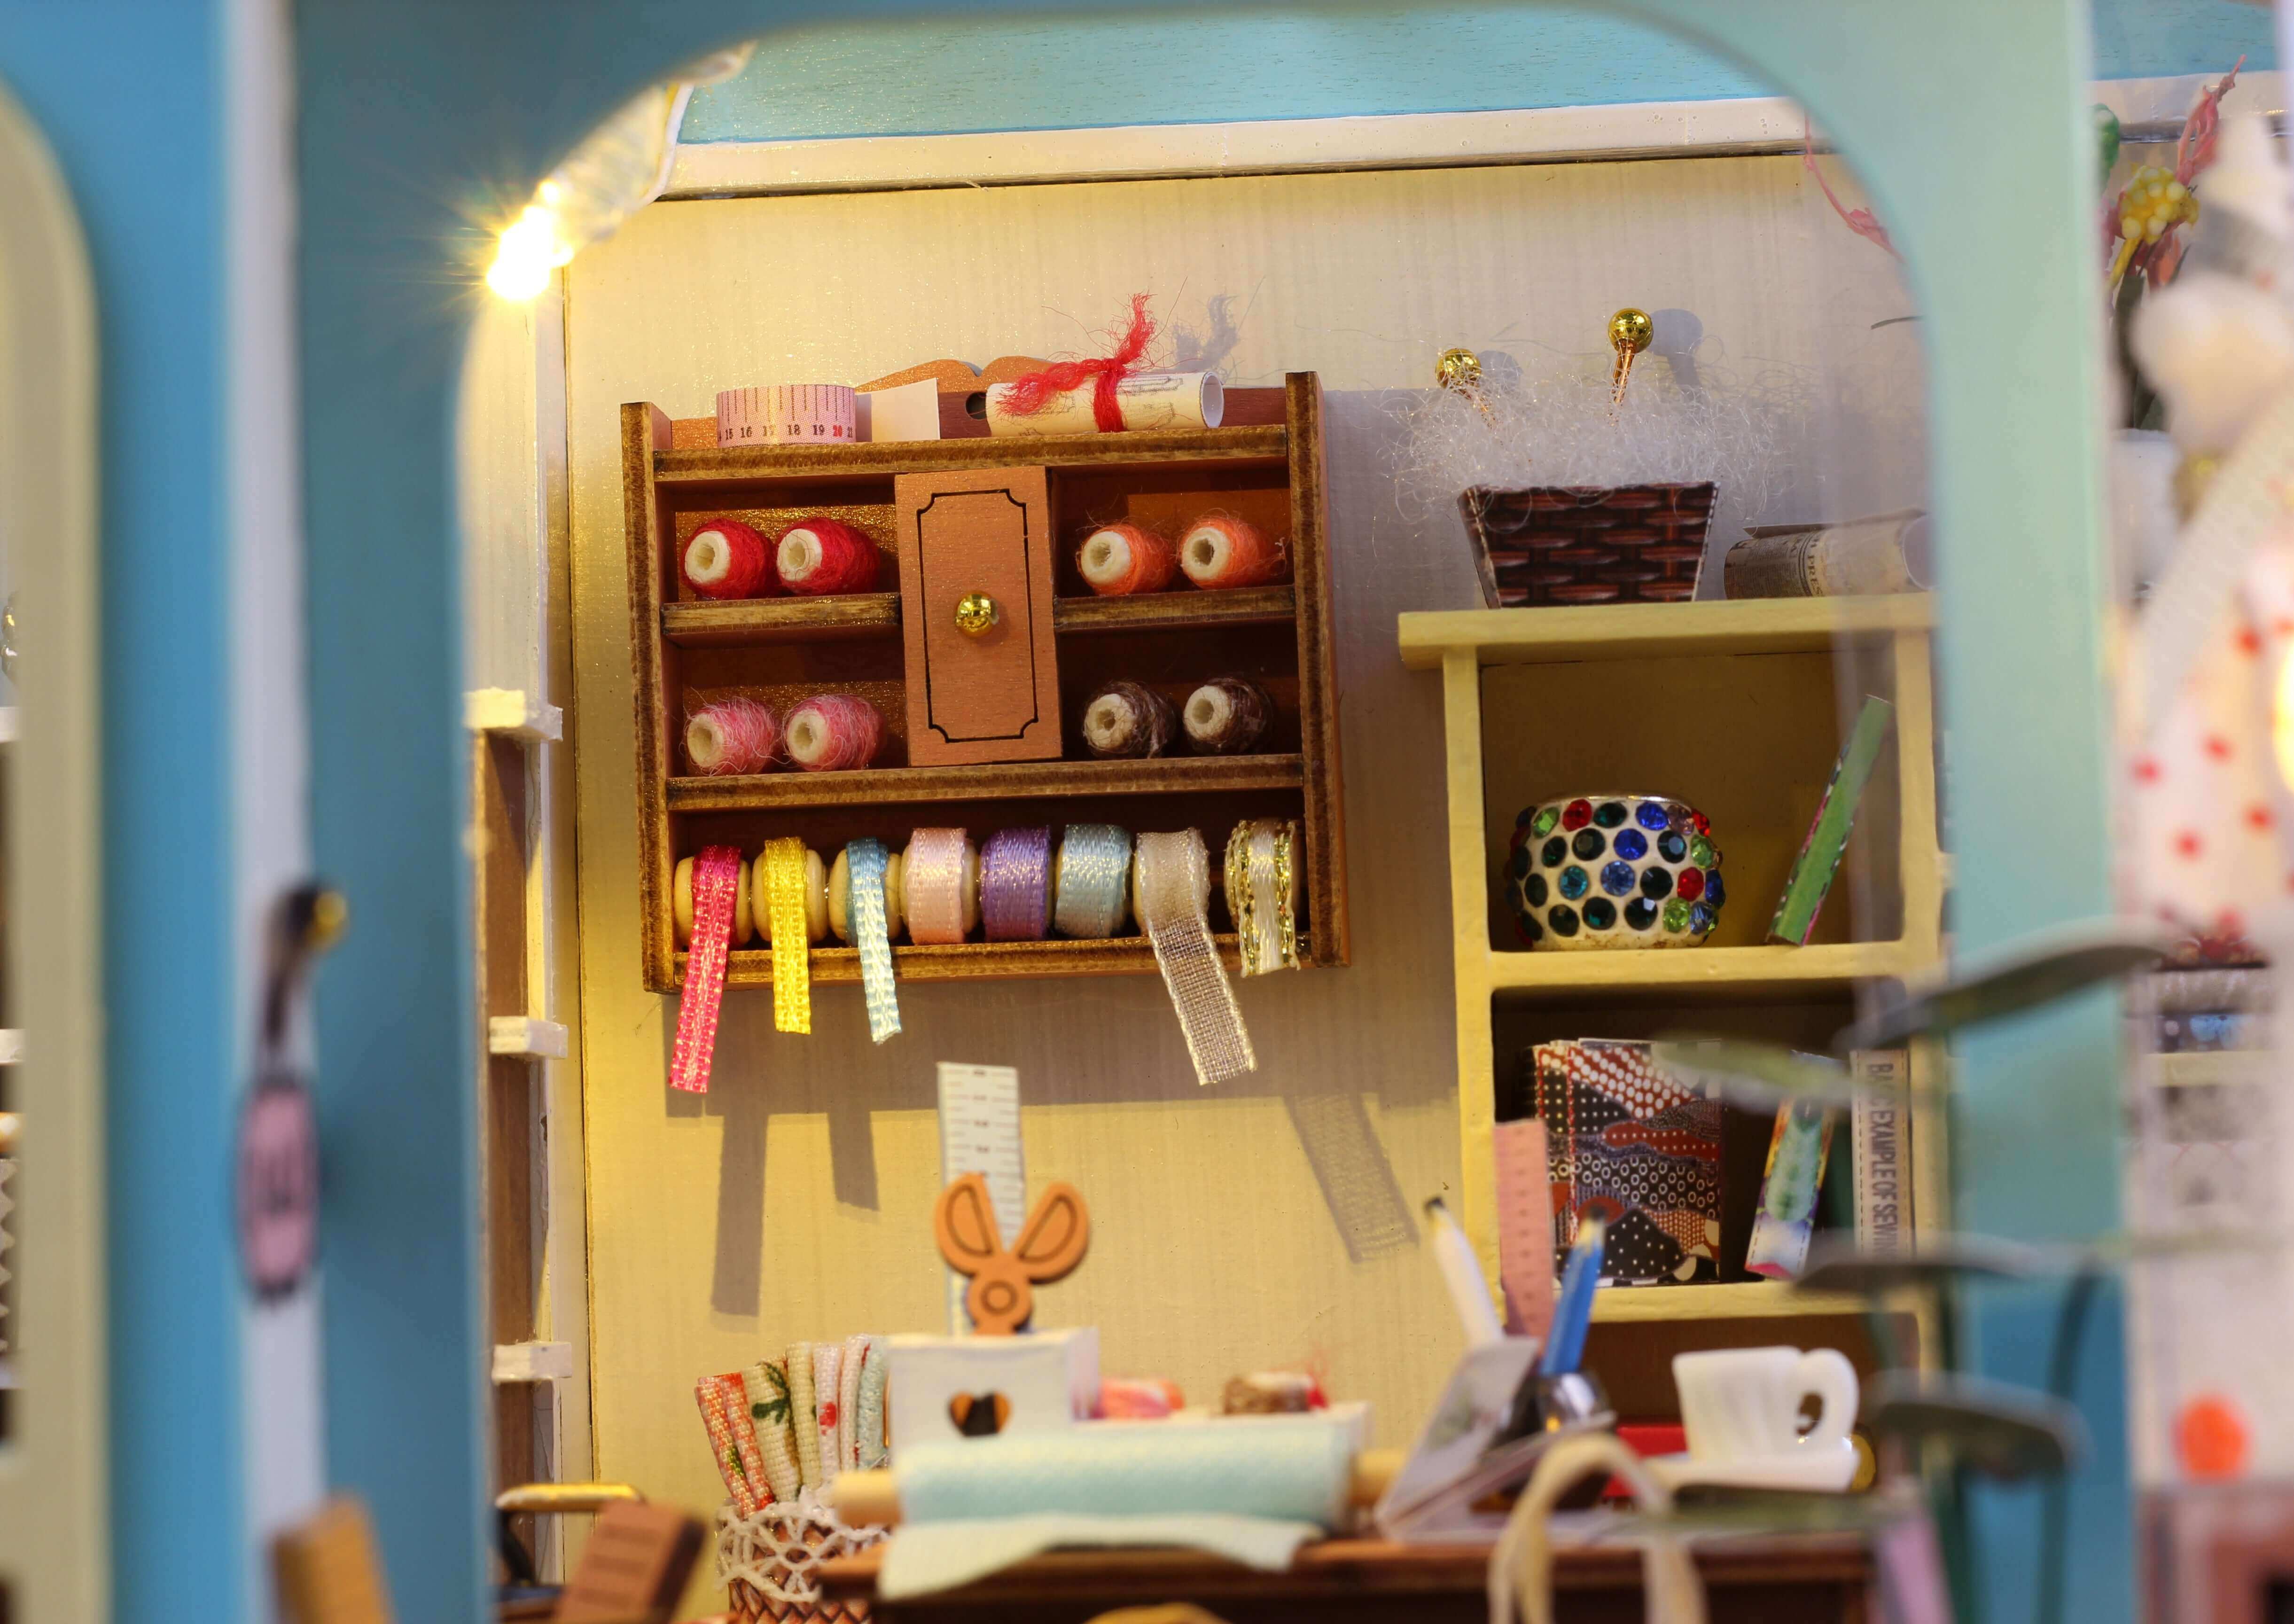 Tailor Shop DIY Miniature House | Anavrin